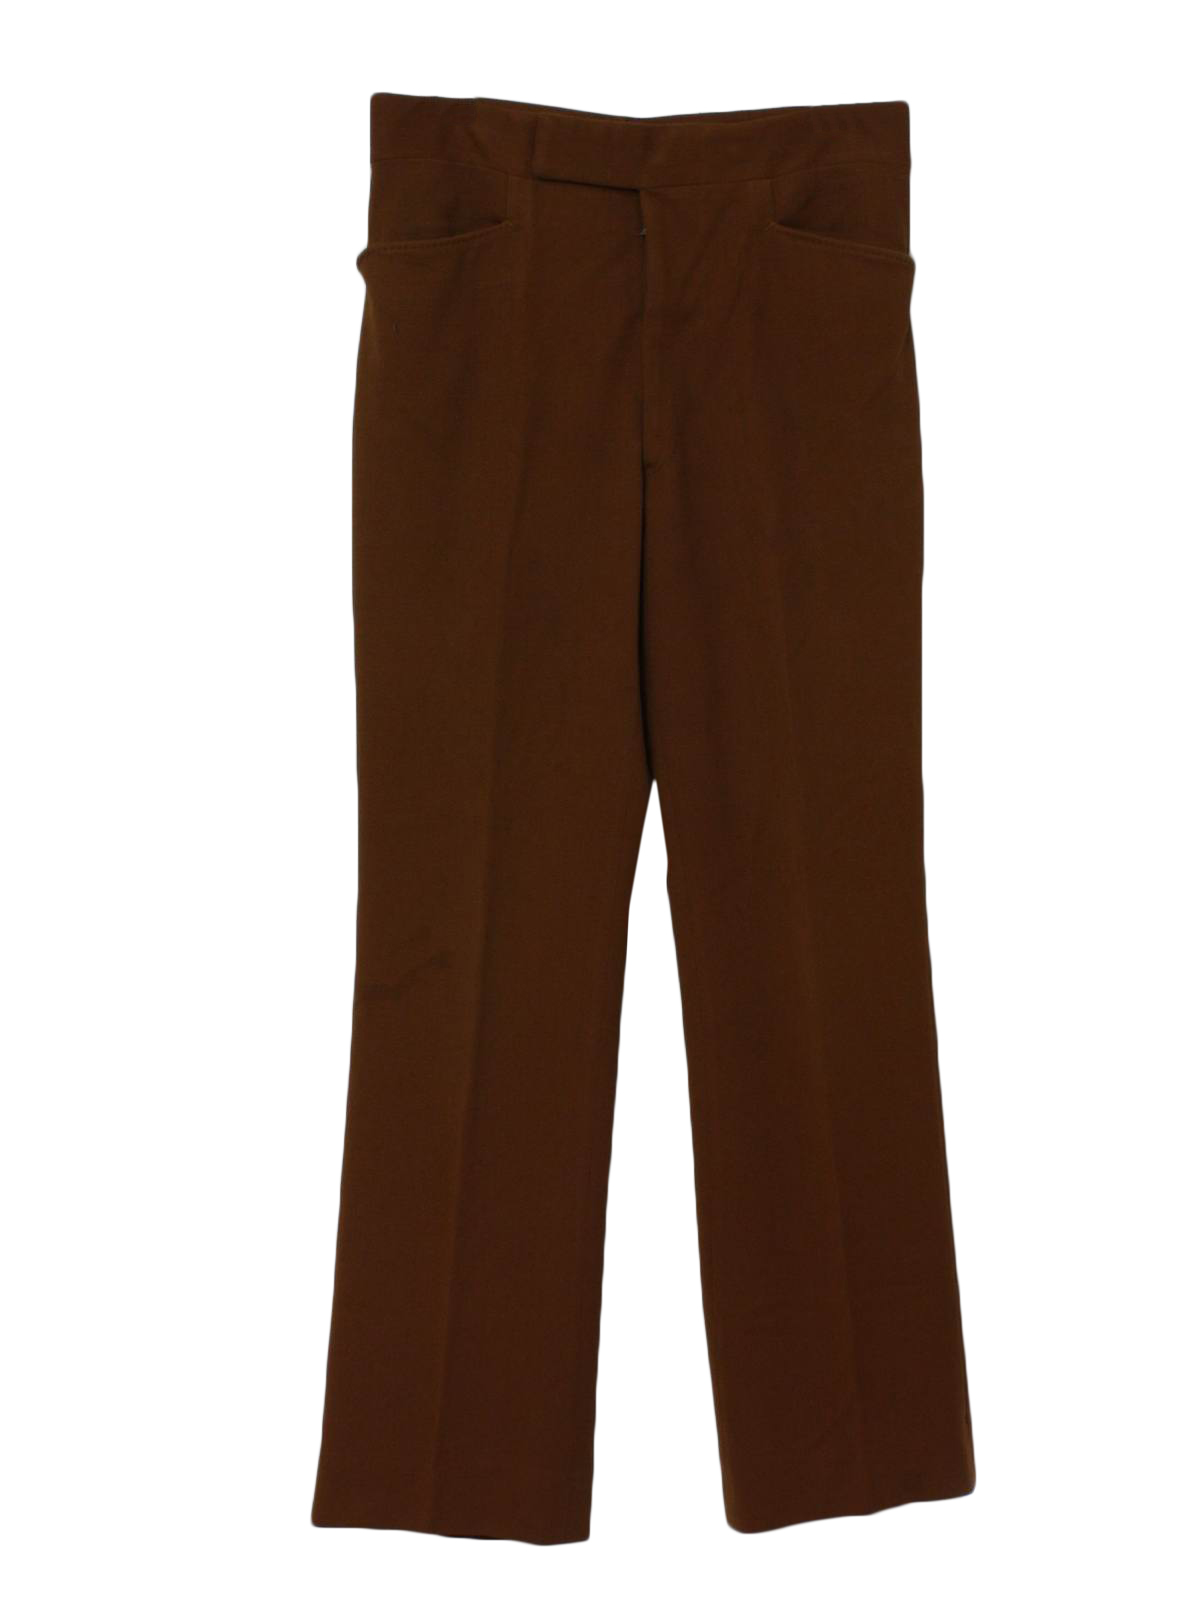 La Jolla 1960s Vintage Flared Pants / Flares: 60s -La Jolla- Mens brown ...